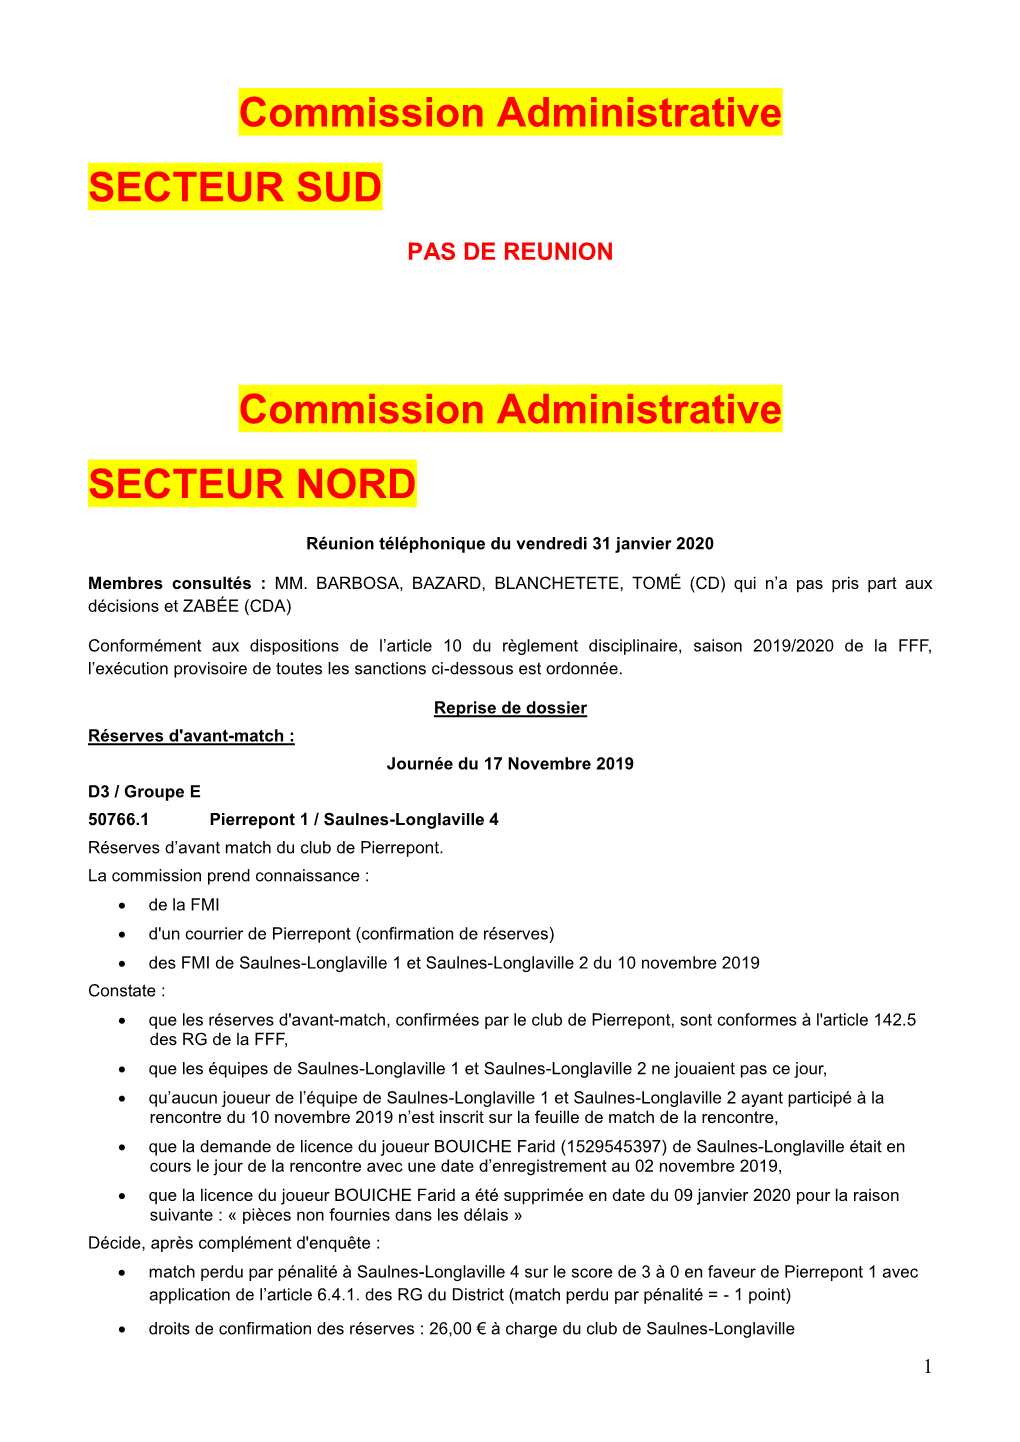 Commission Administrative SECTEUR NORD